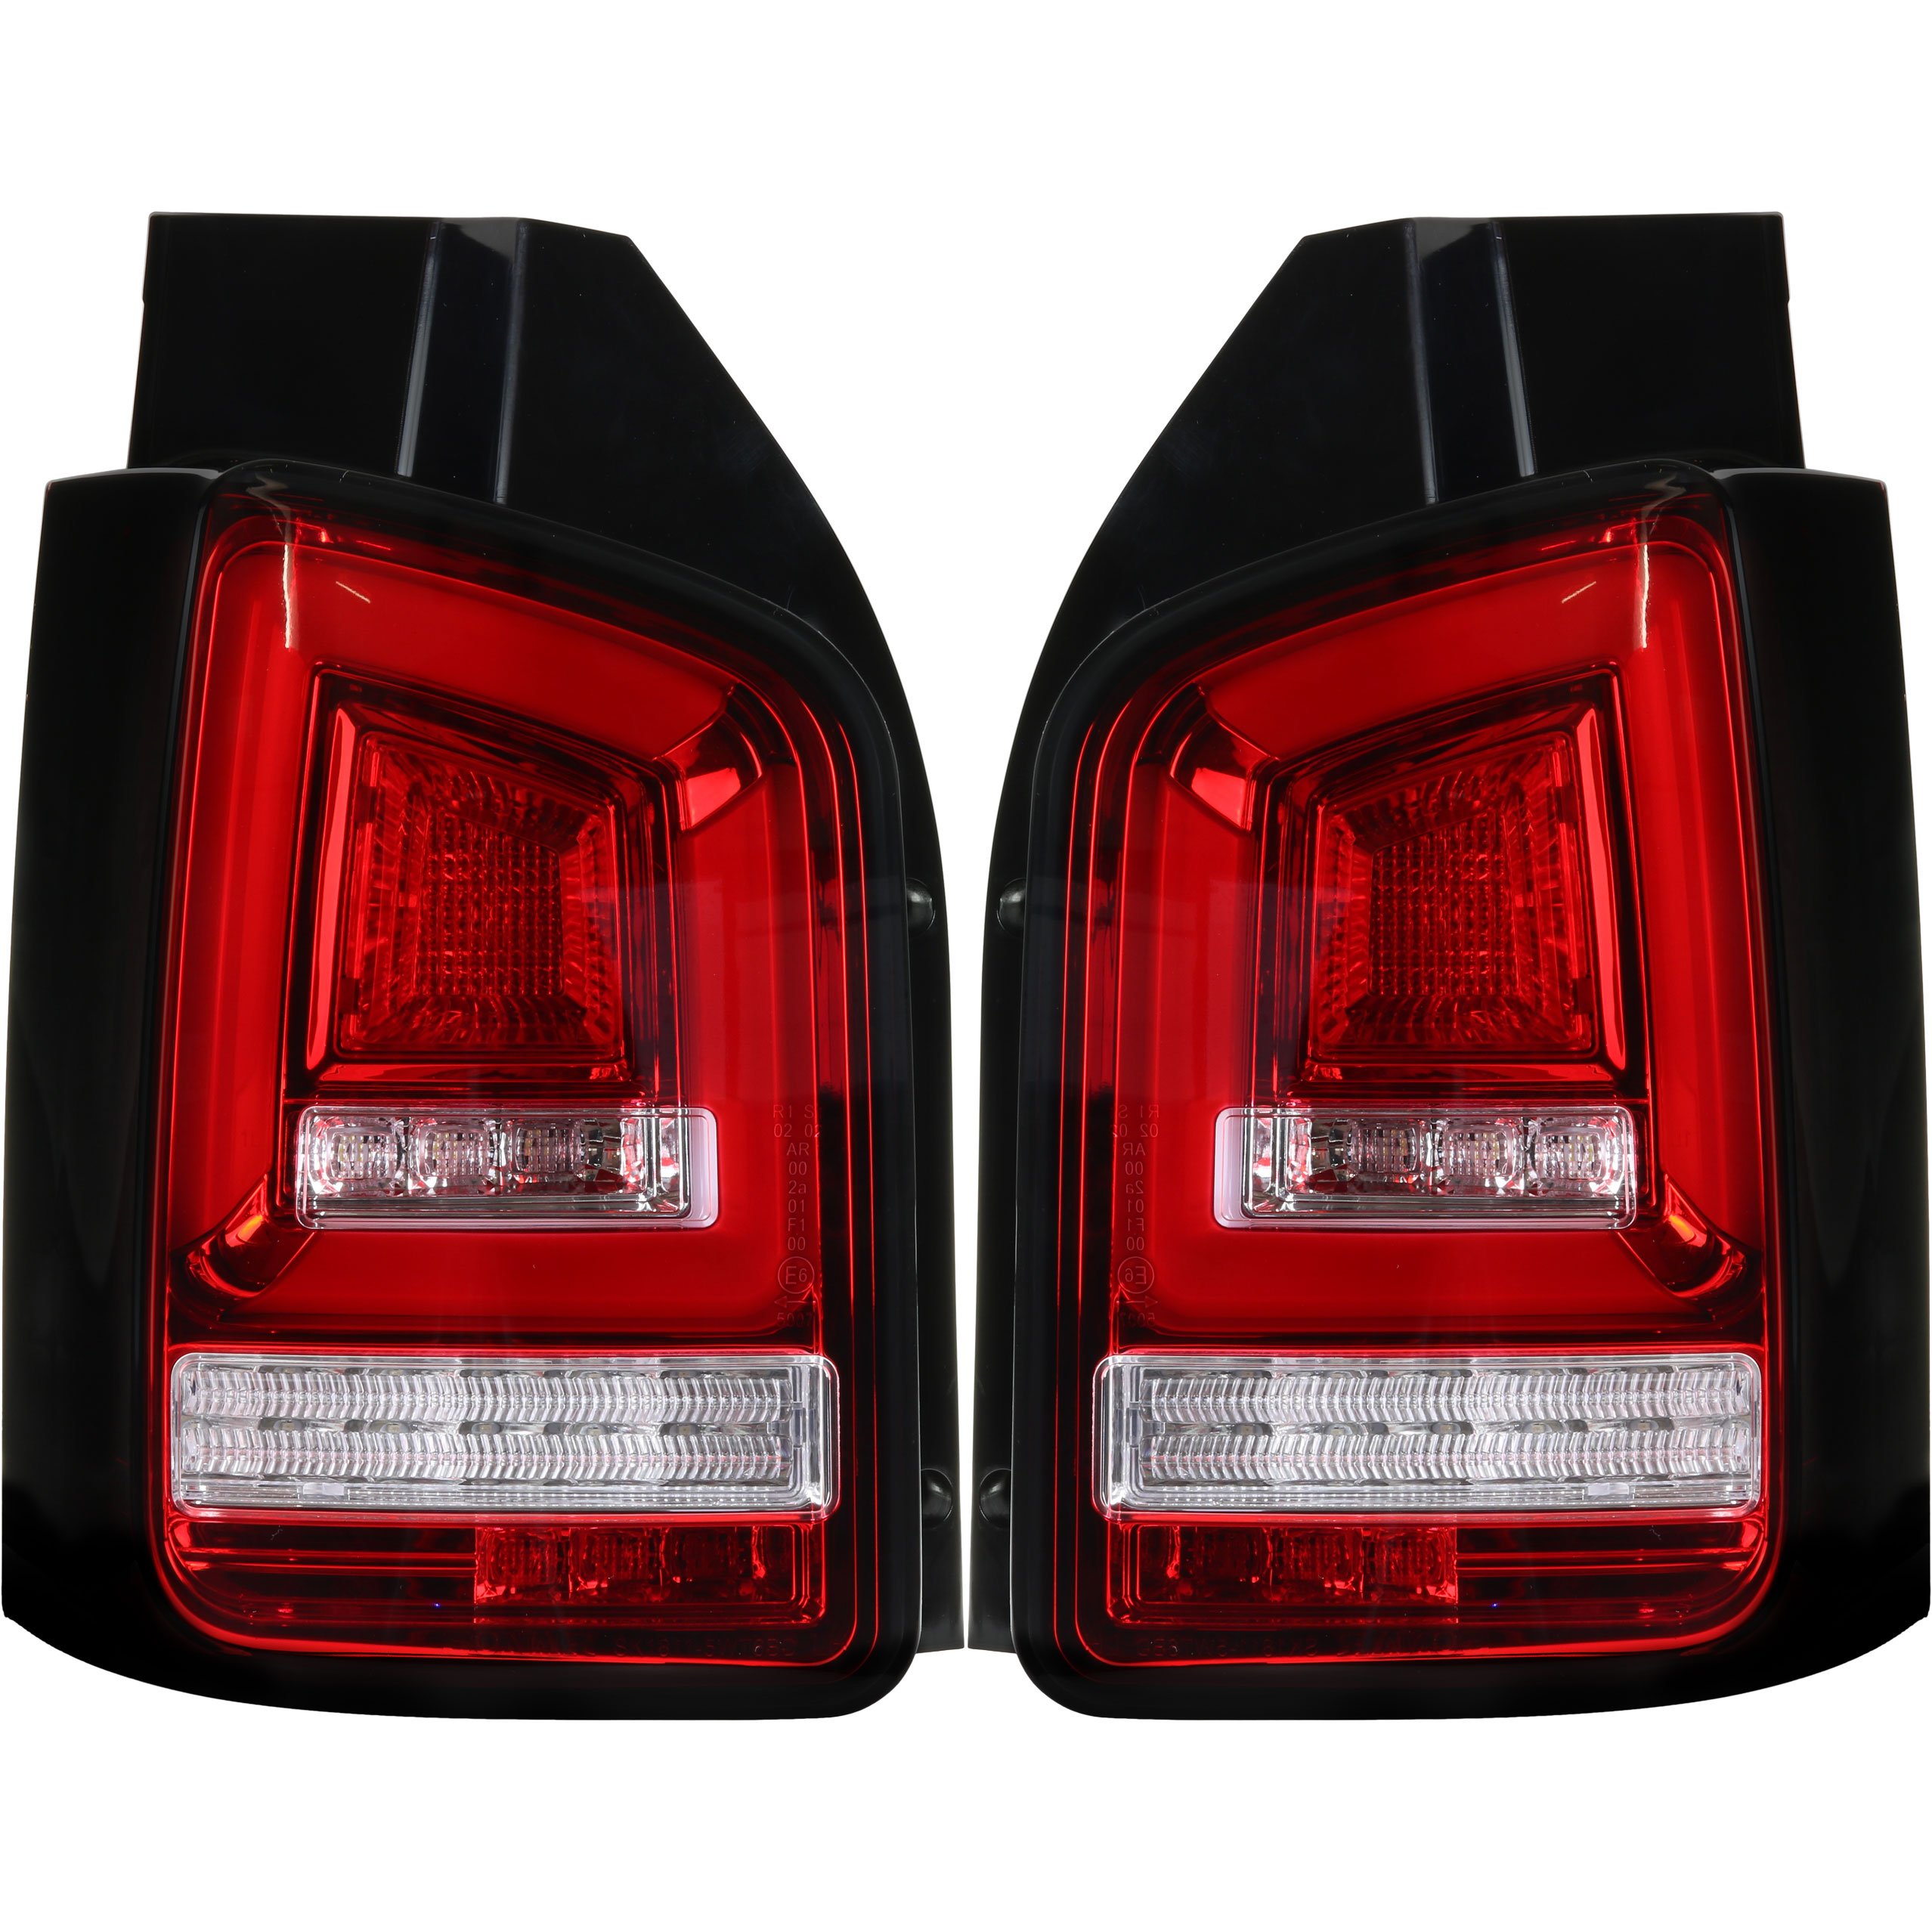 Rückleuchten Set Voll LED Lightbar für VW T5 Bj. 03-09 rot klar für  Heckklappe